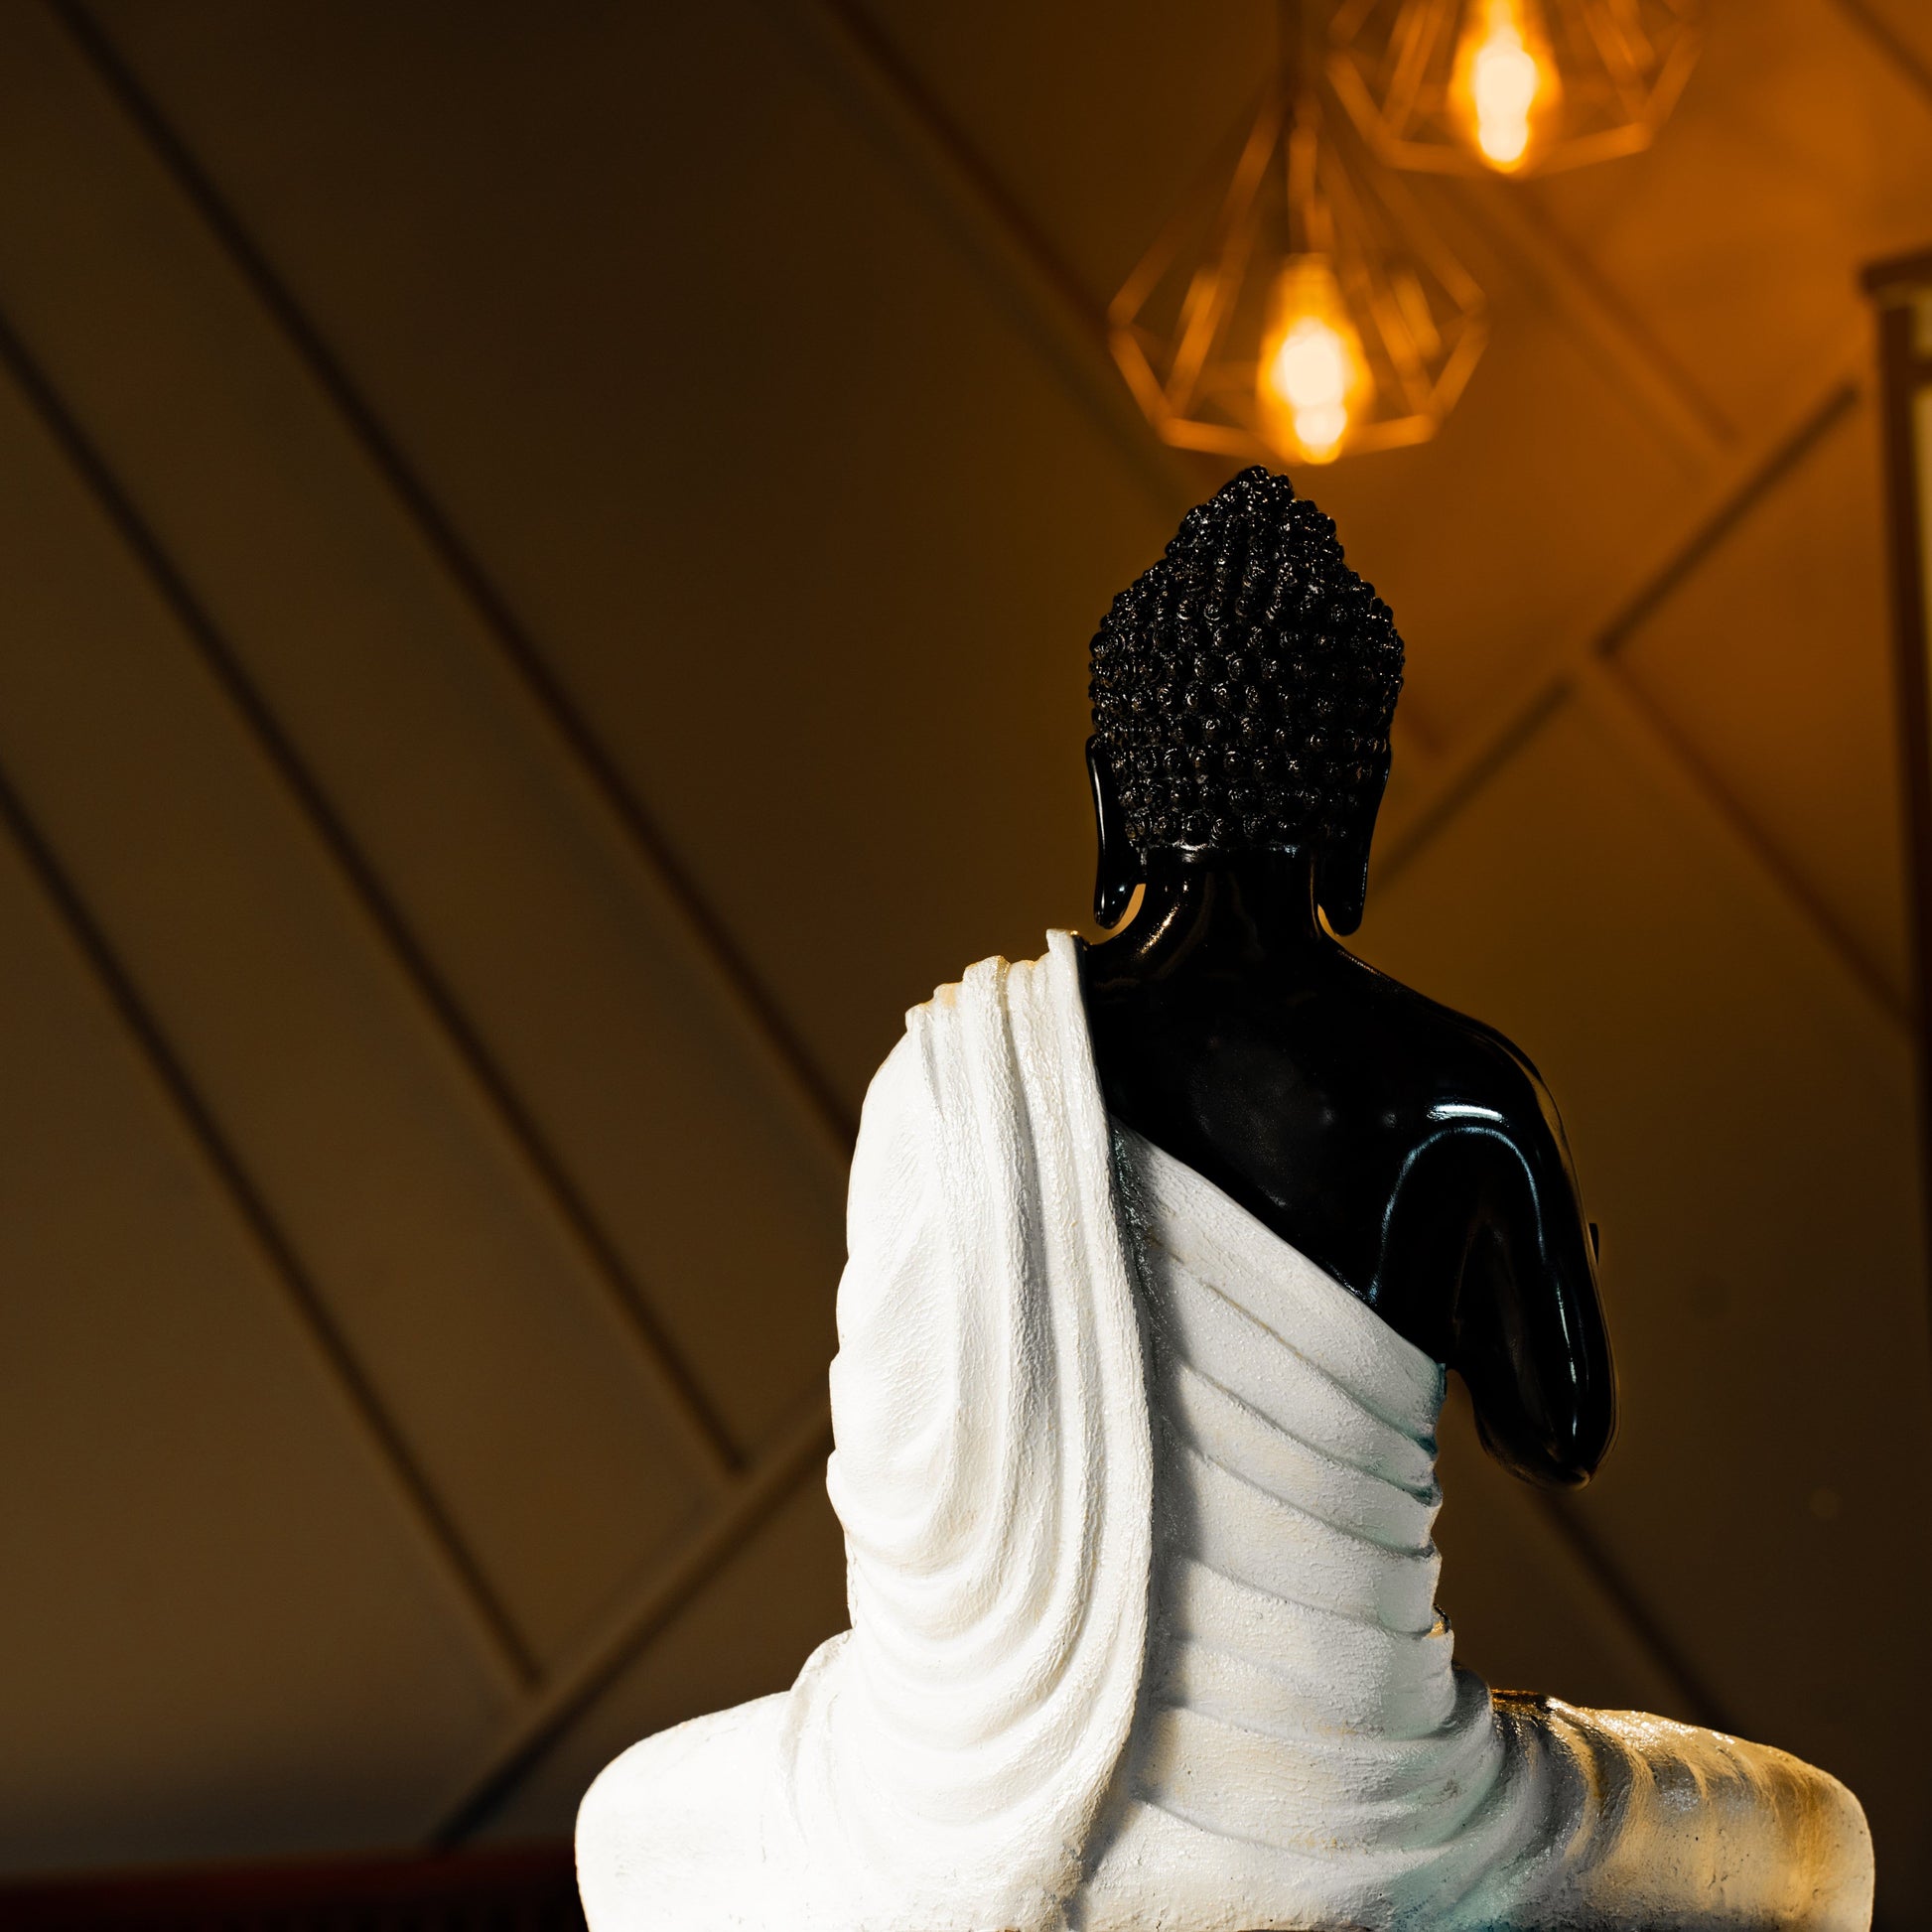 The meditating buddha- Black and white edition - madsbox